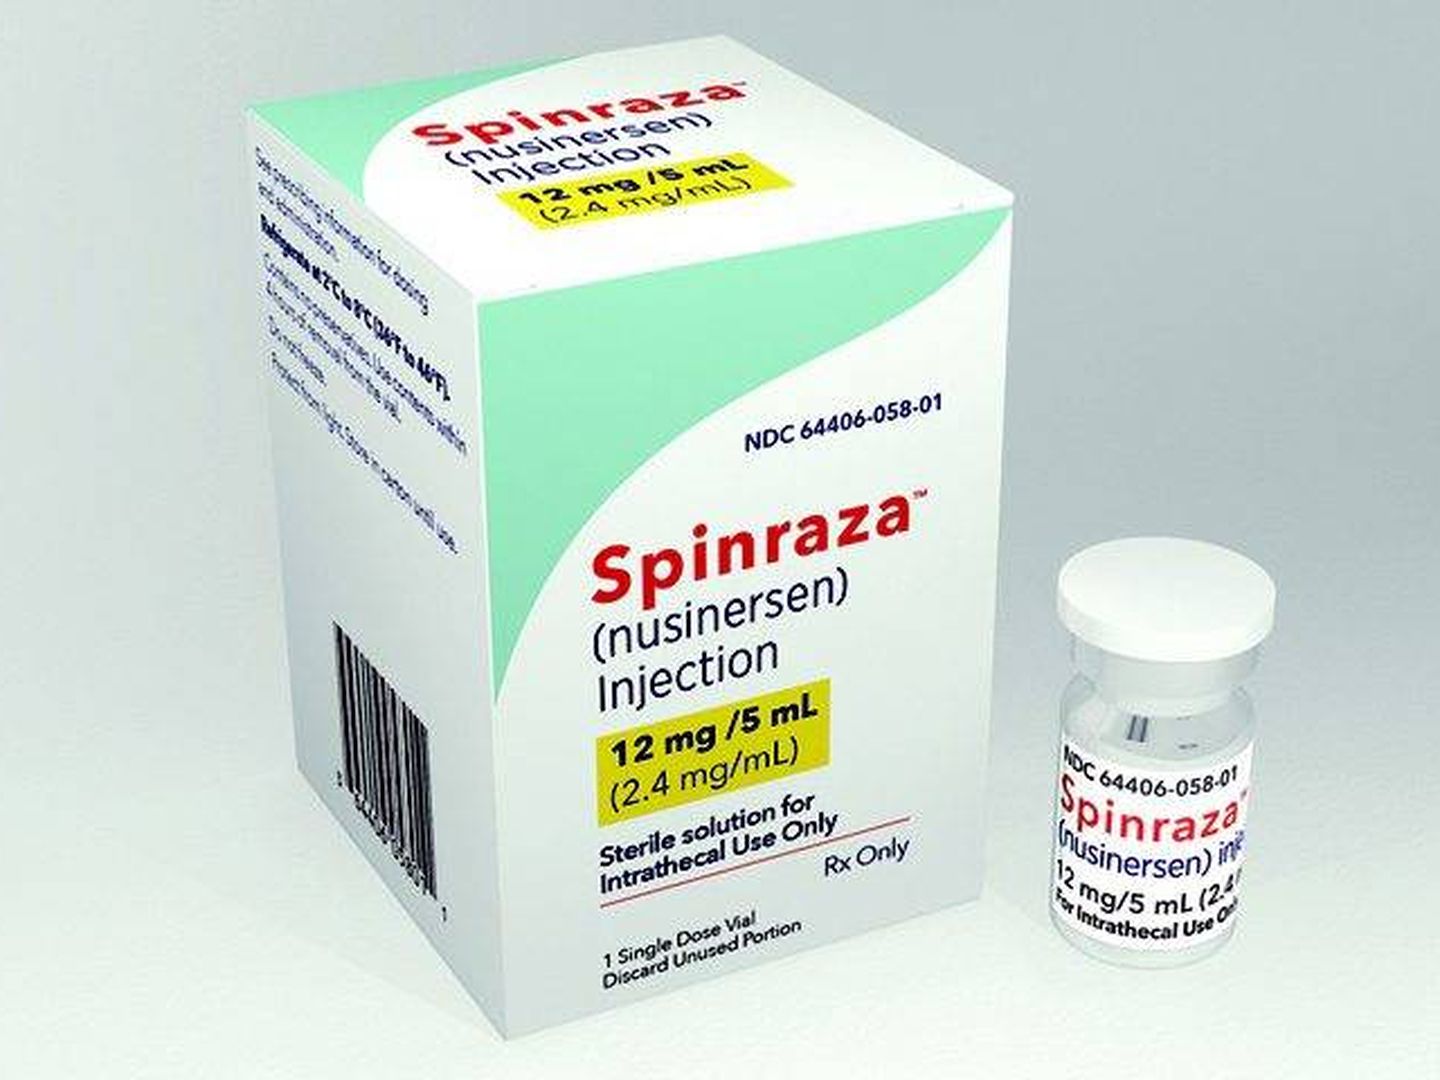 Paquete de Spinraza (Foto: Spinraza)